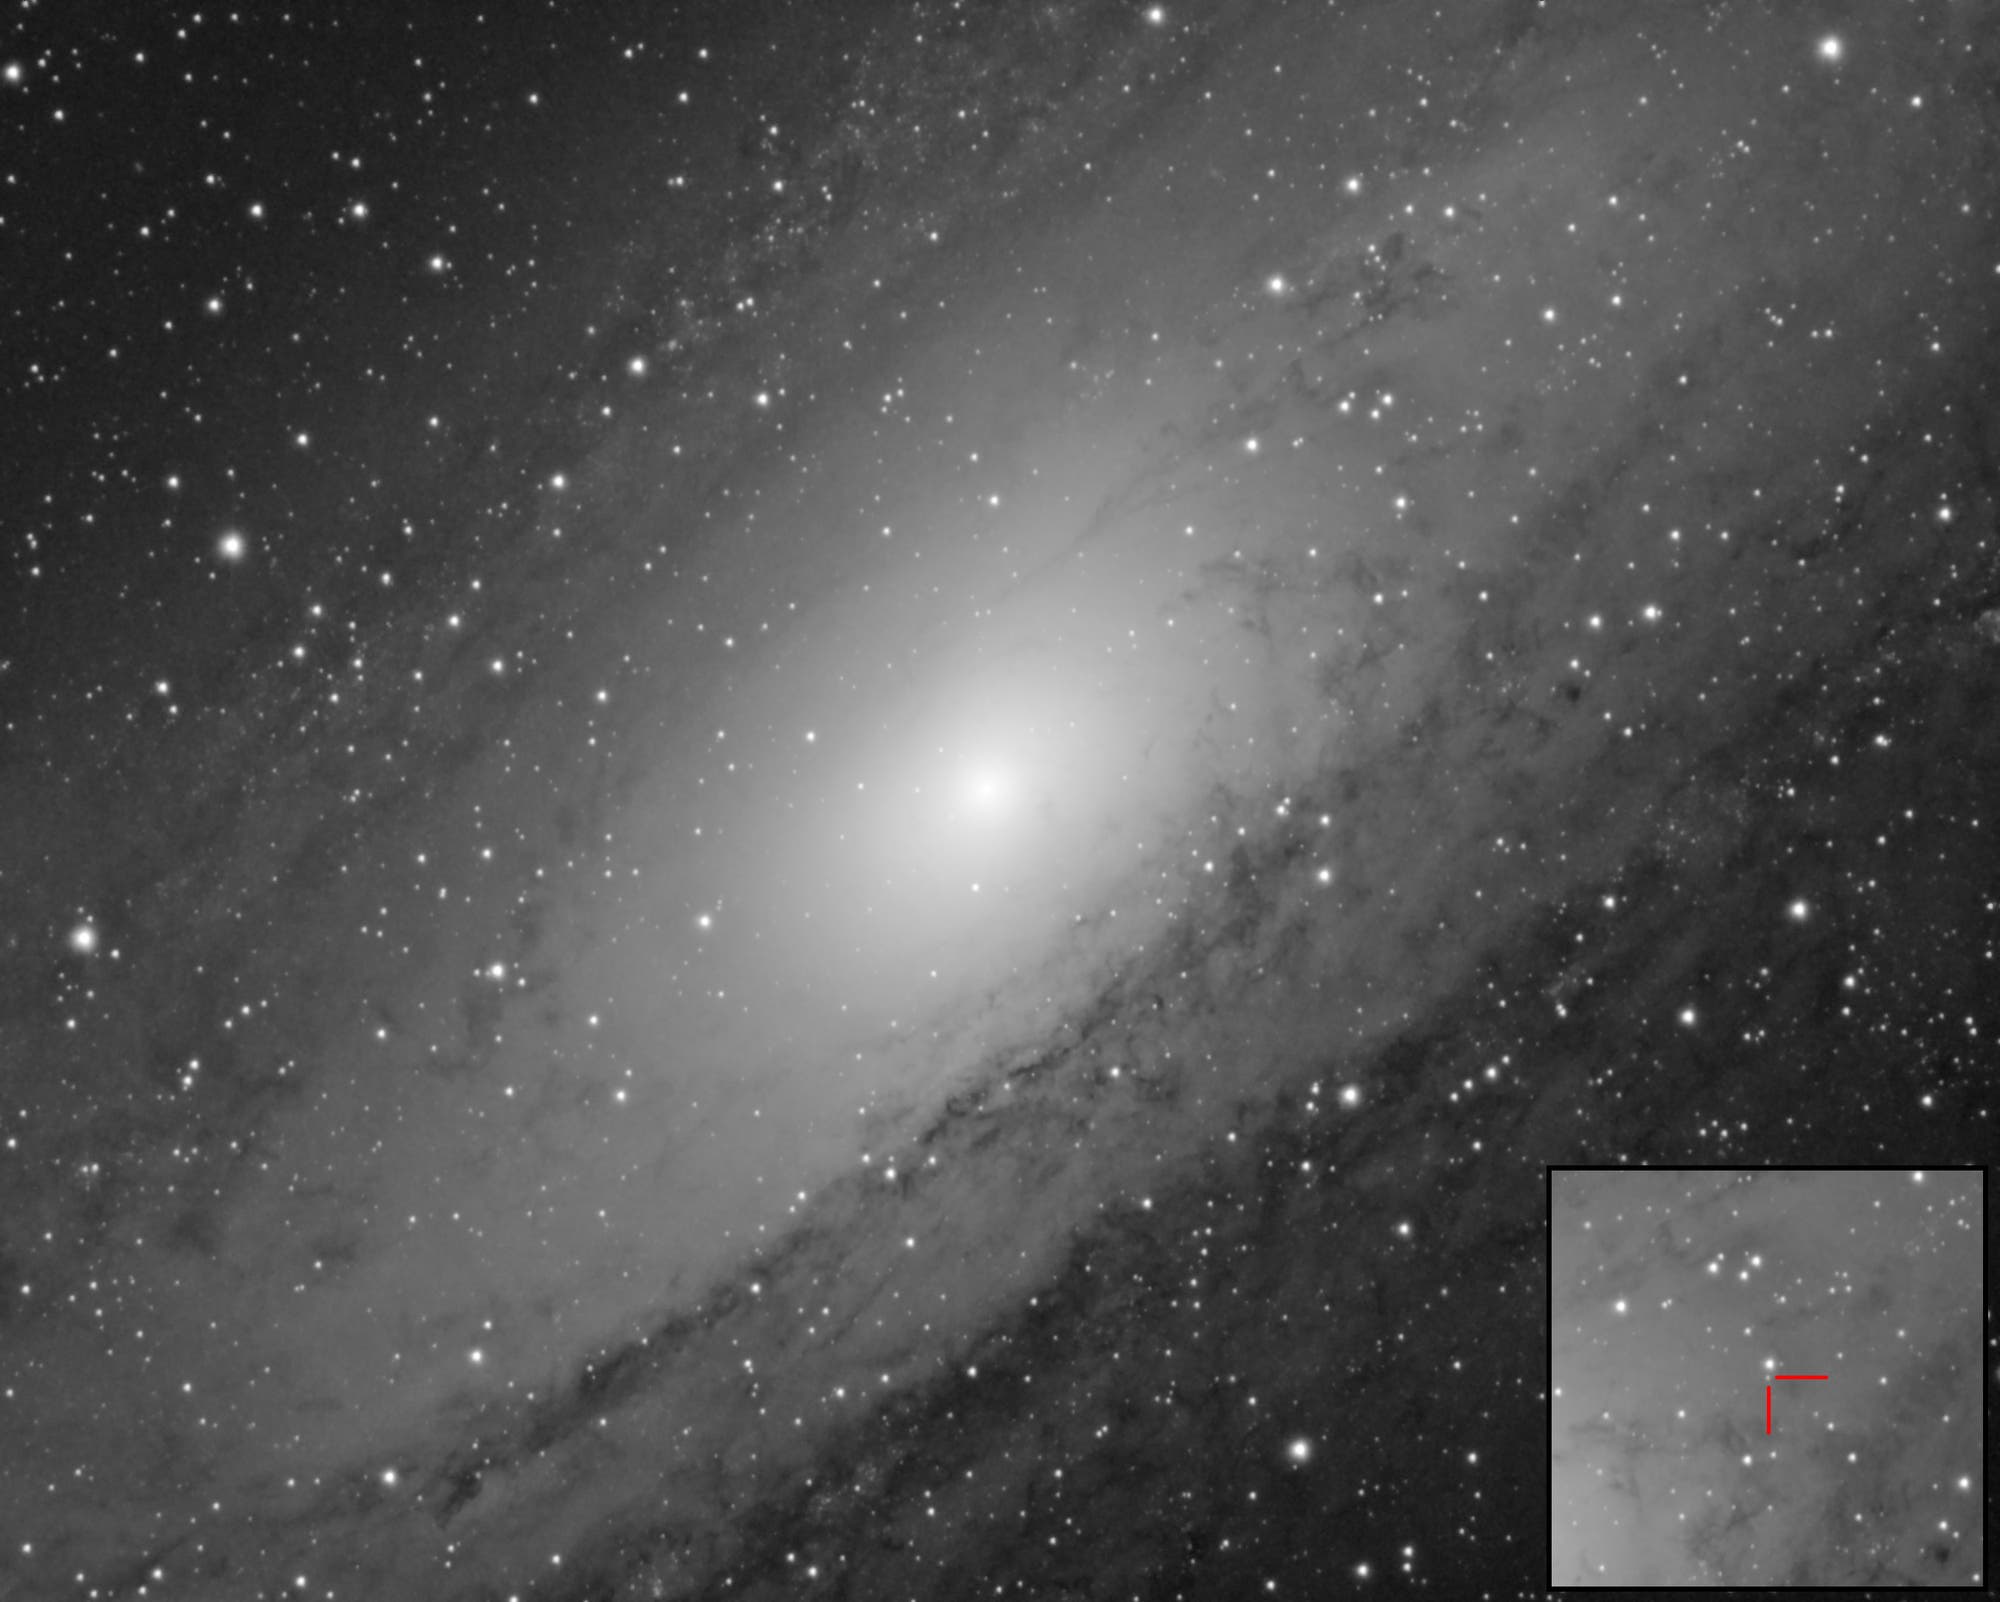 Nova AT2020yye in Messier 31